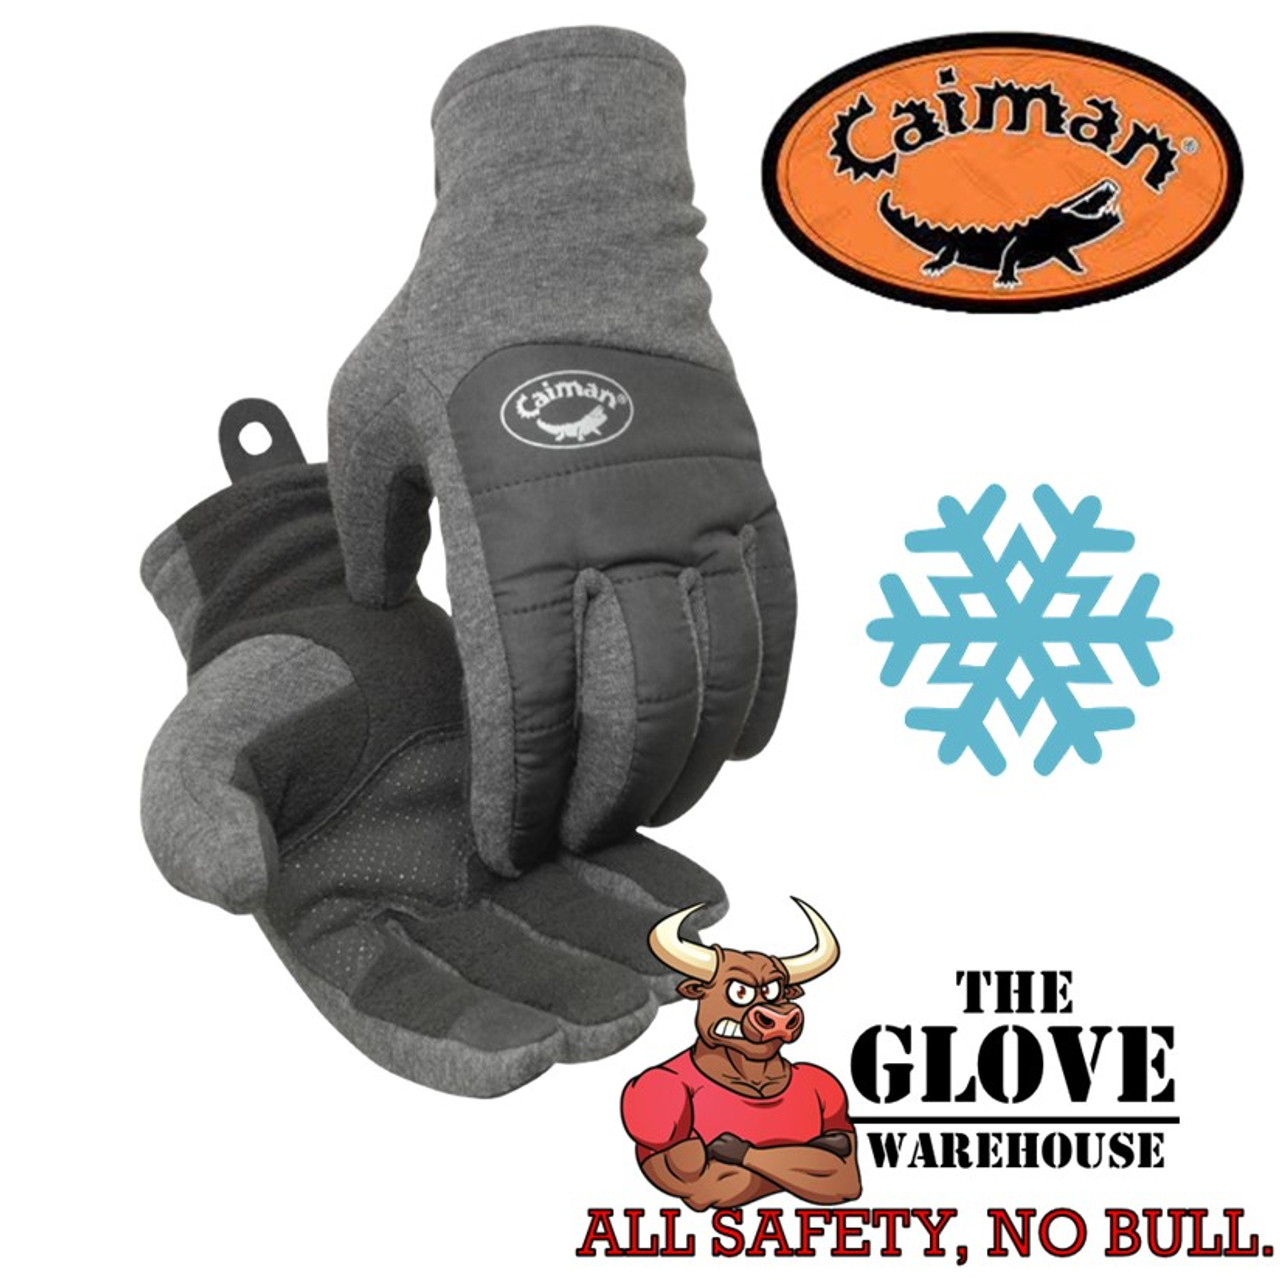 Caiman 2384 - F-Tec™ Cool Climate Gloves (1 pair)